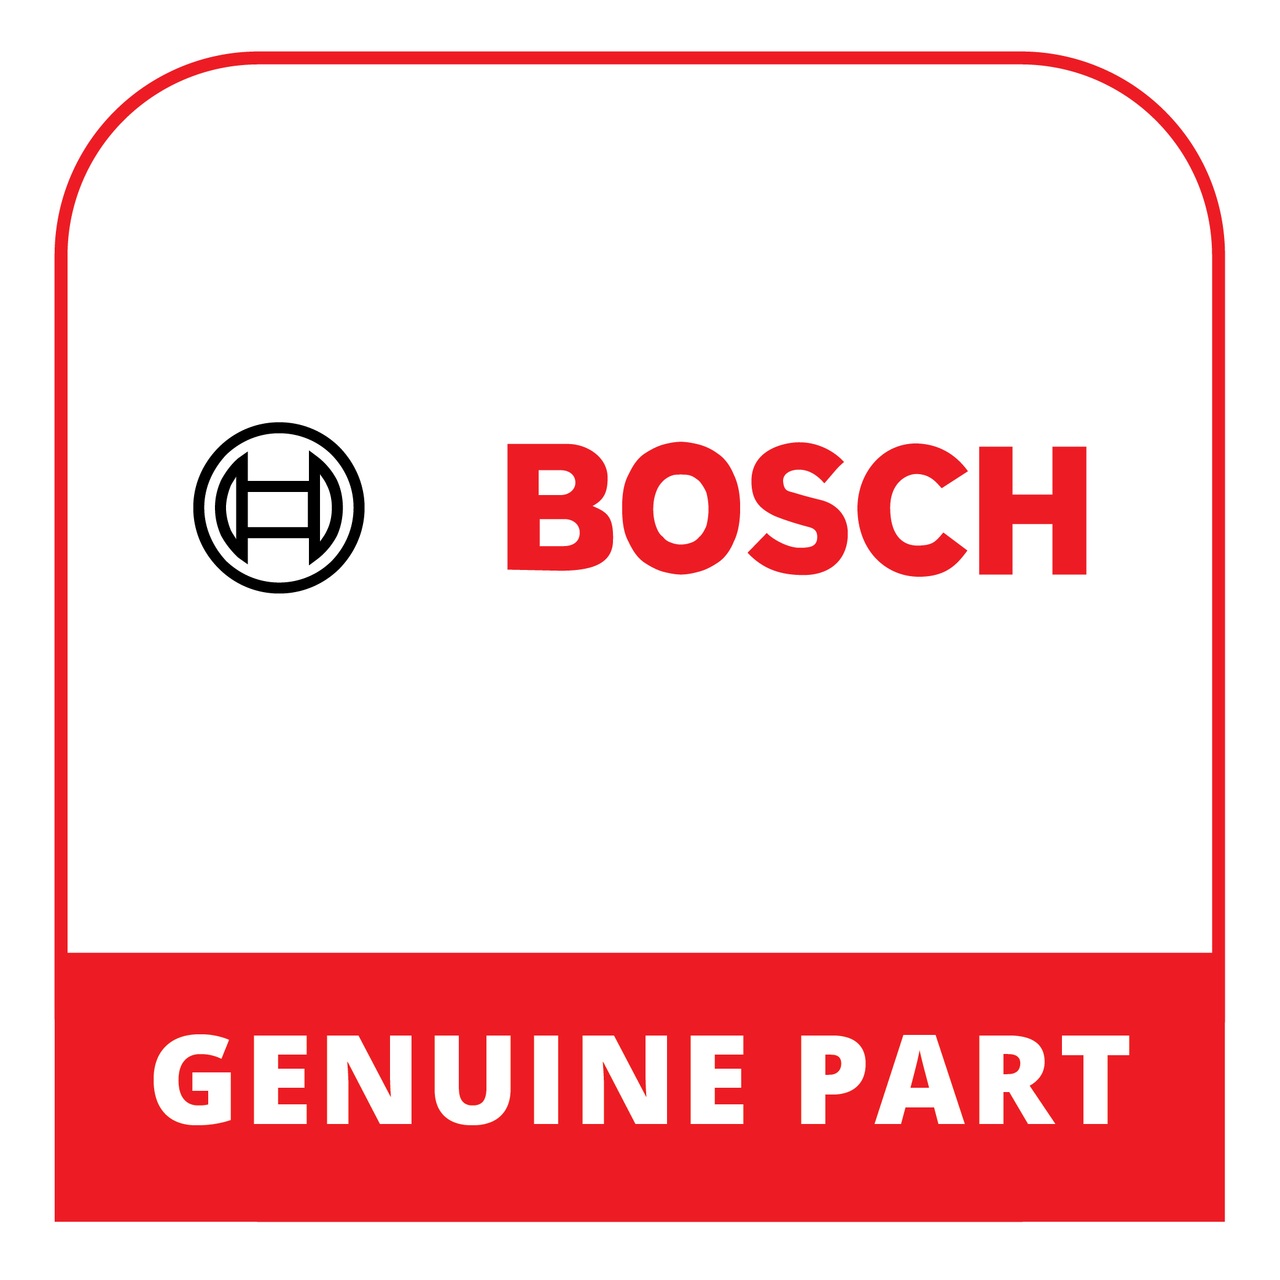 Bosch (Thermador) 00778932 - Panel-Facia - Genuine Bosch (Thermador) Part